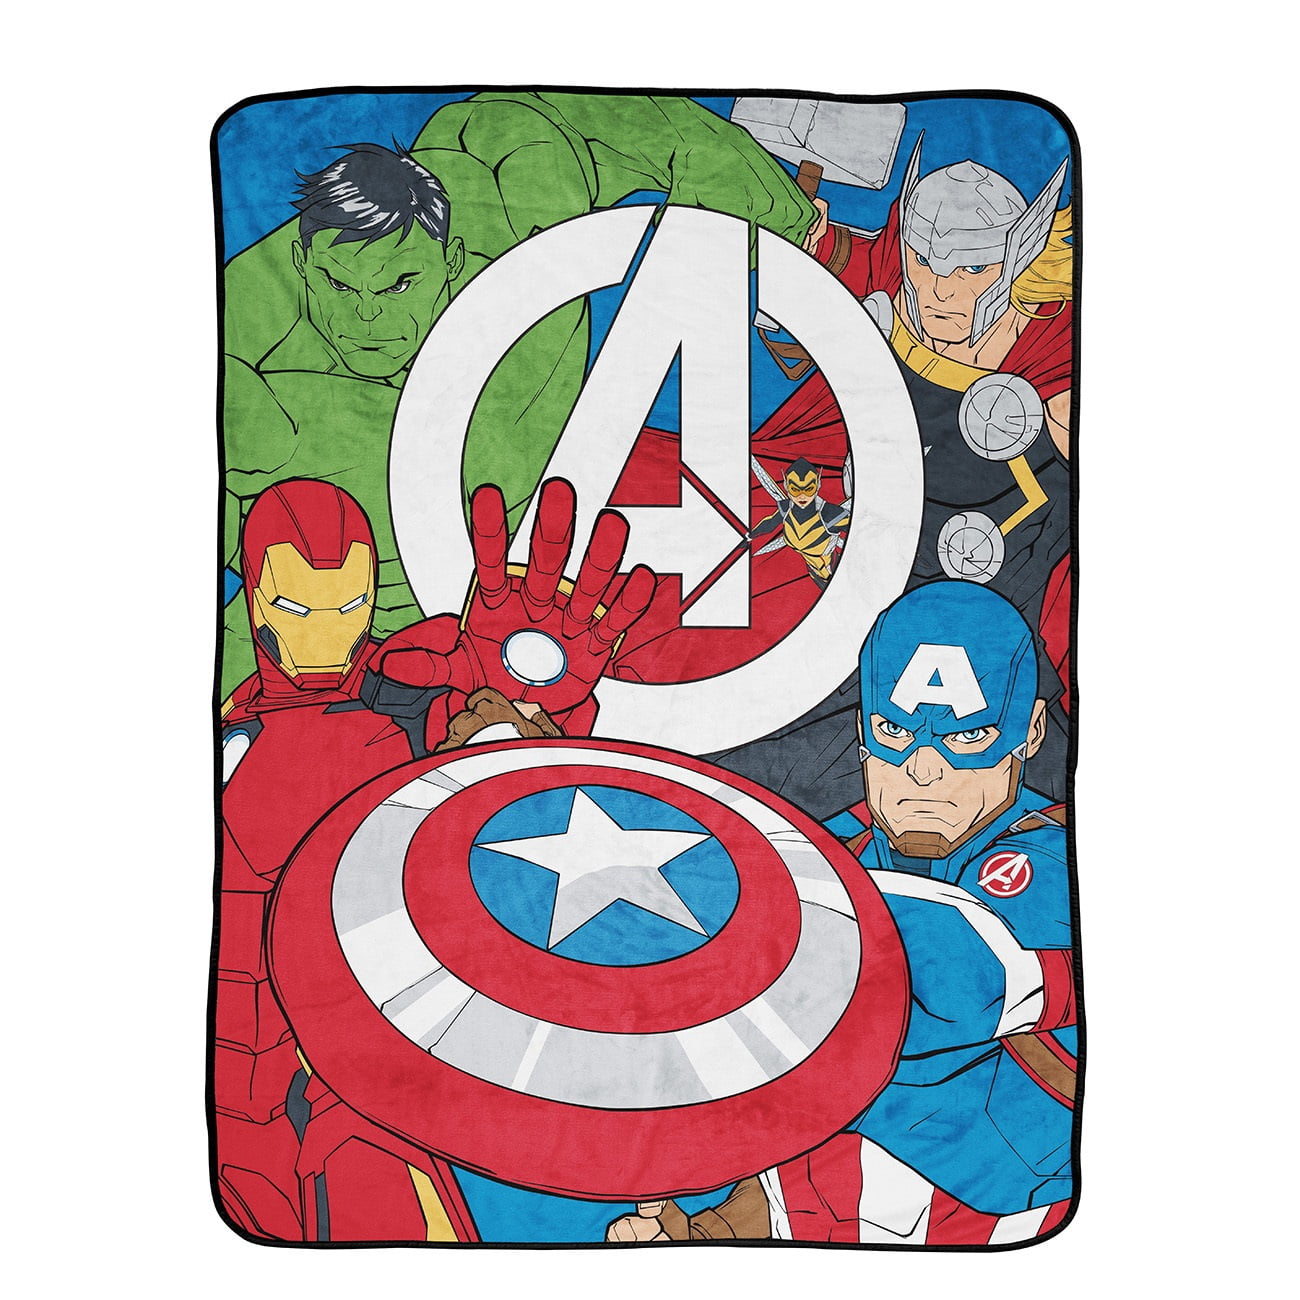 Avengers Members Only Captain America Kids Throw, 46 x 60, Microfiber, Red,  Marvel